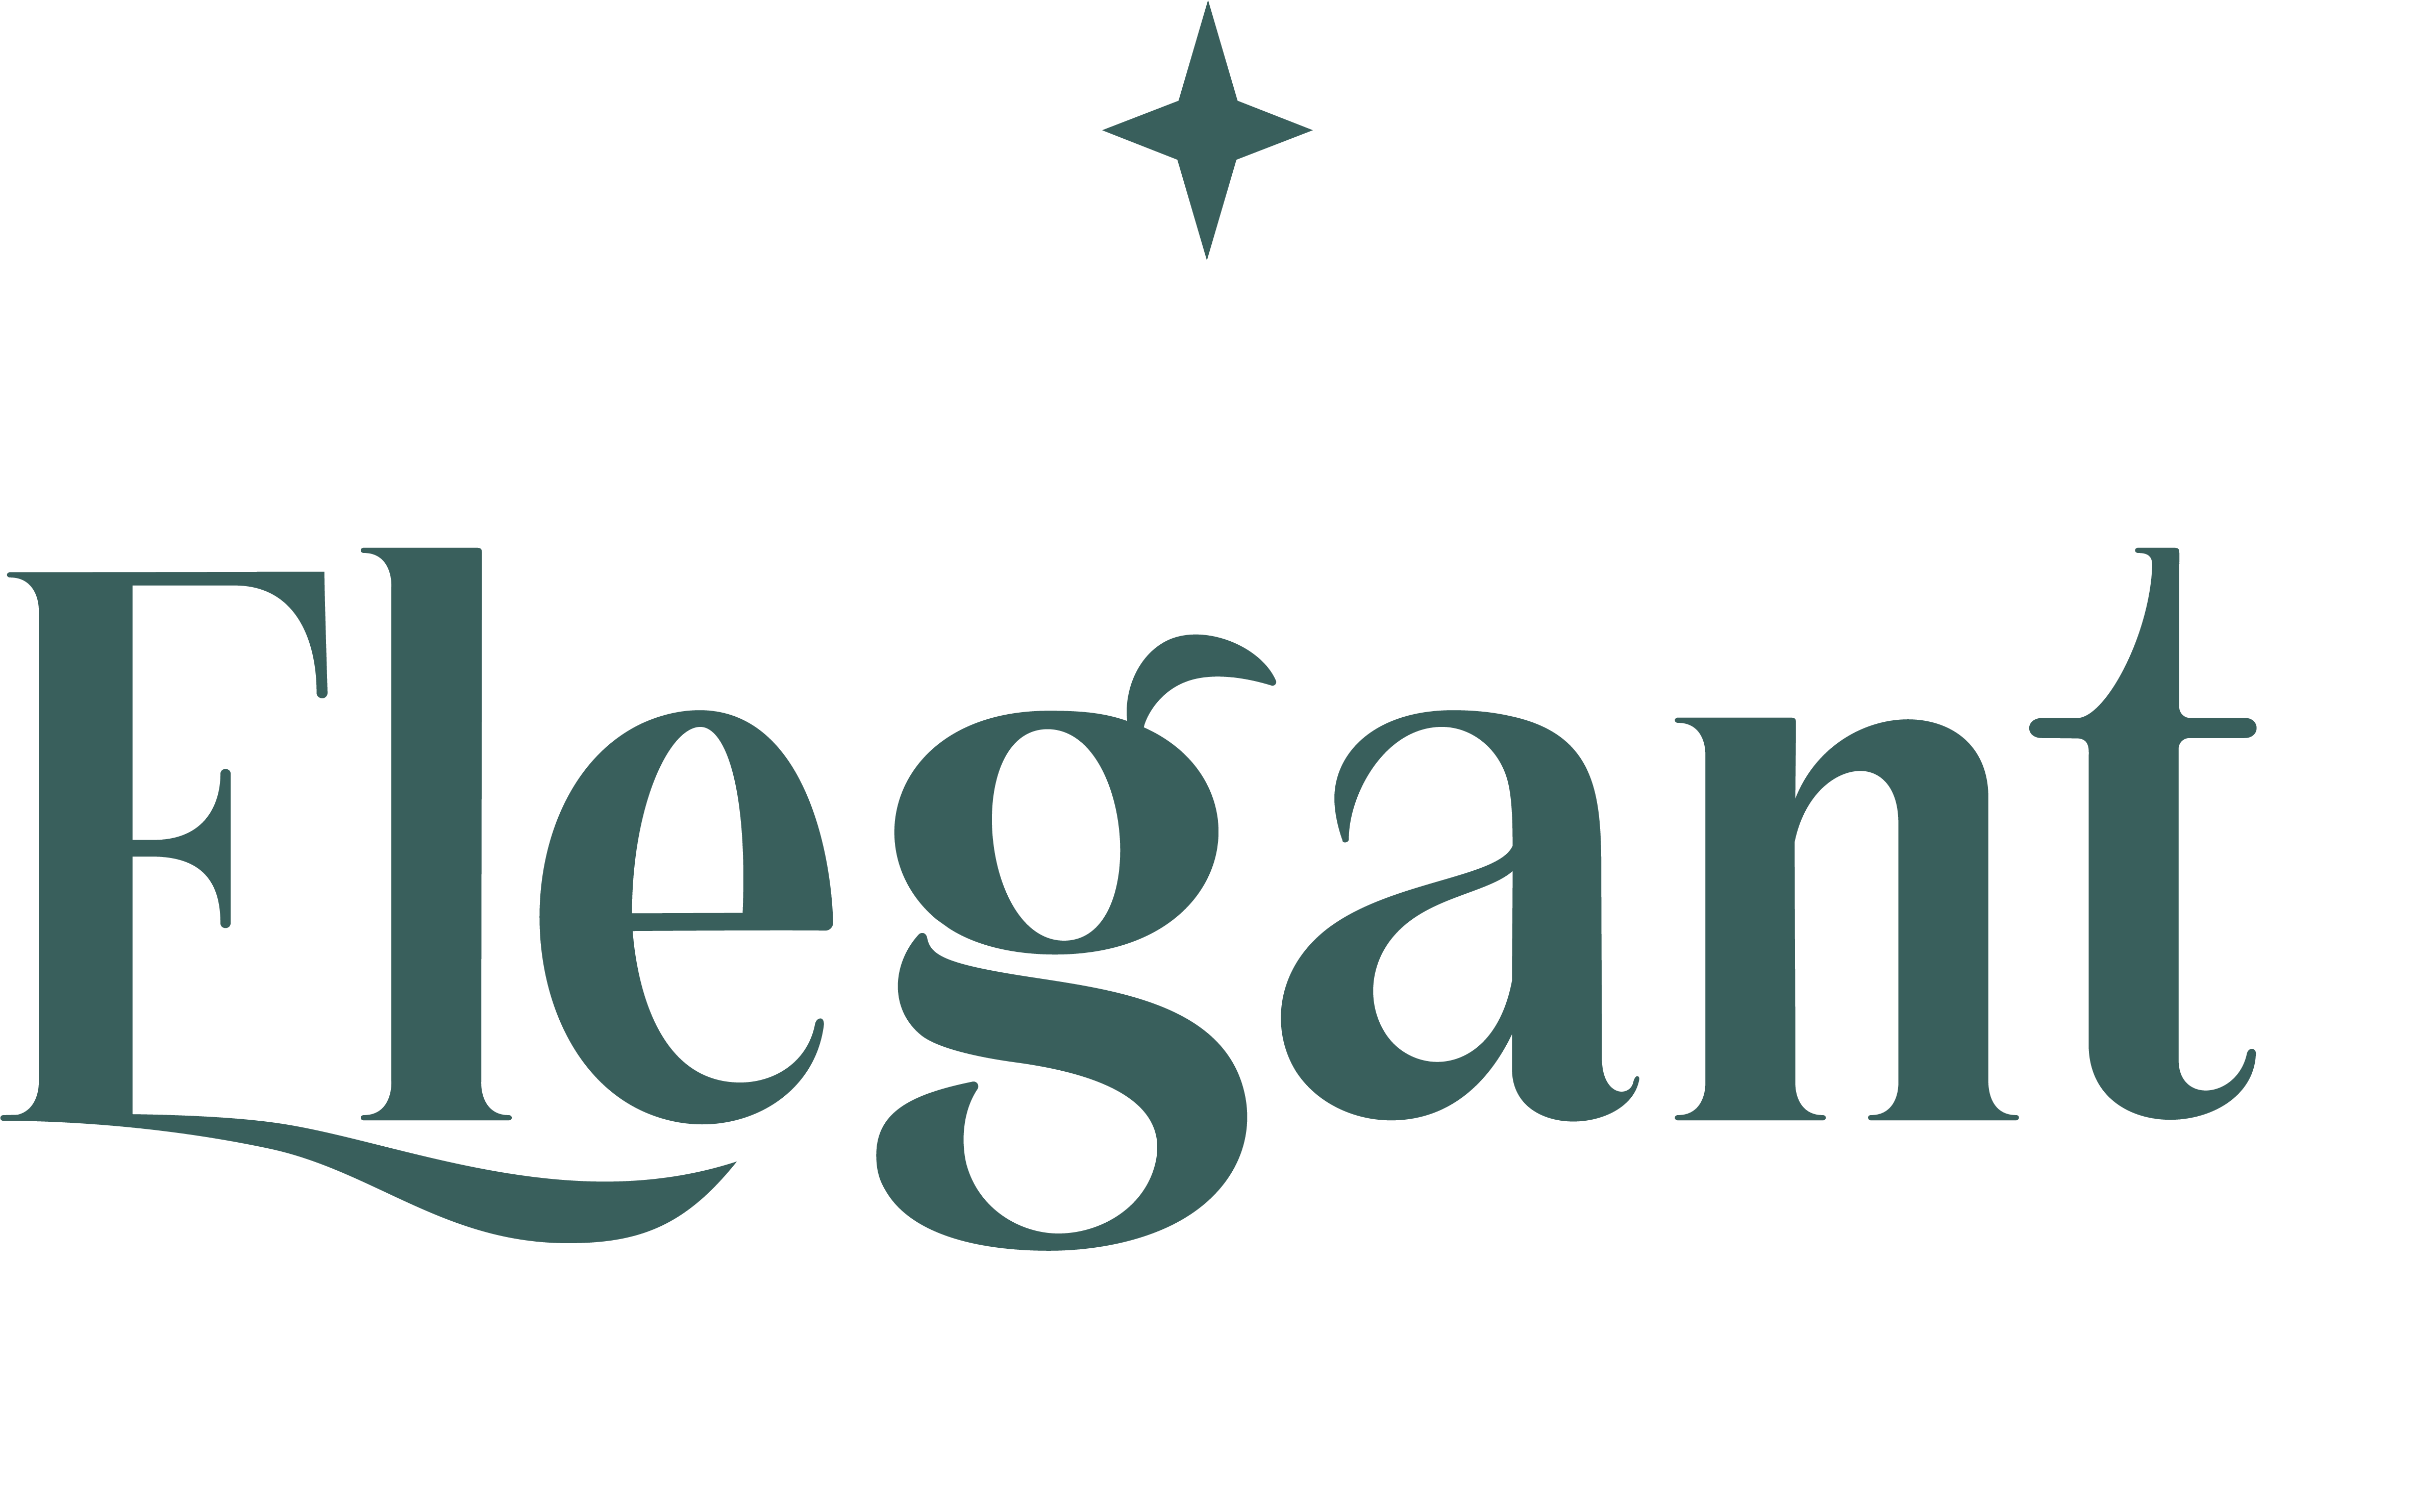 Logo Elegant Fashion